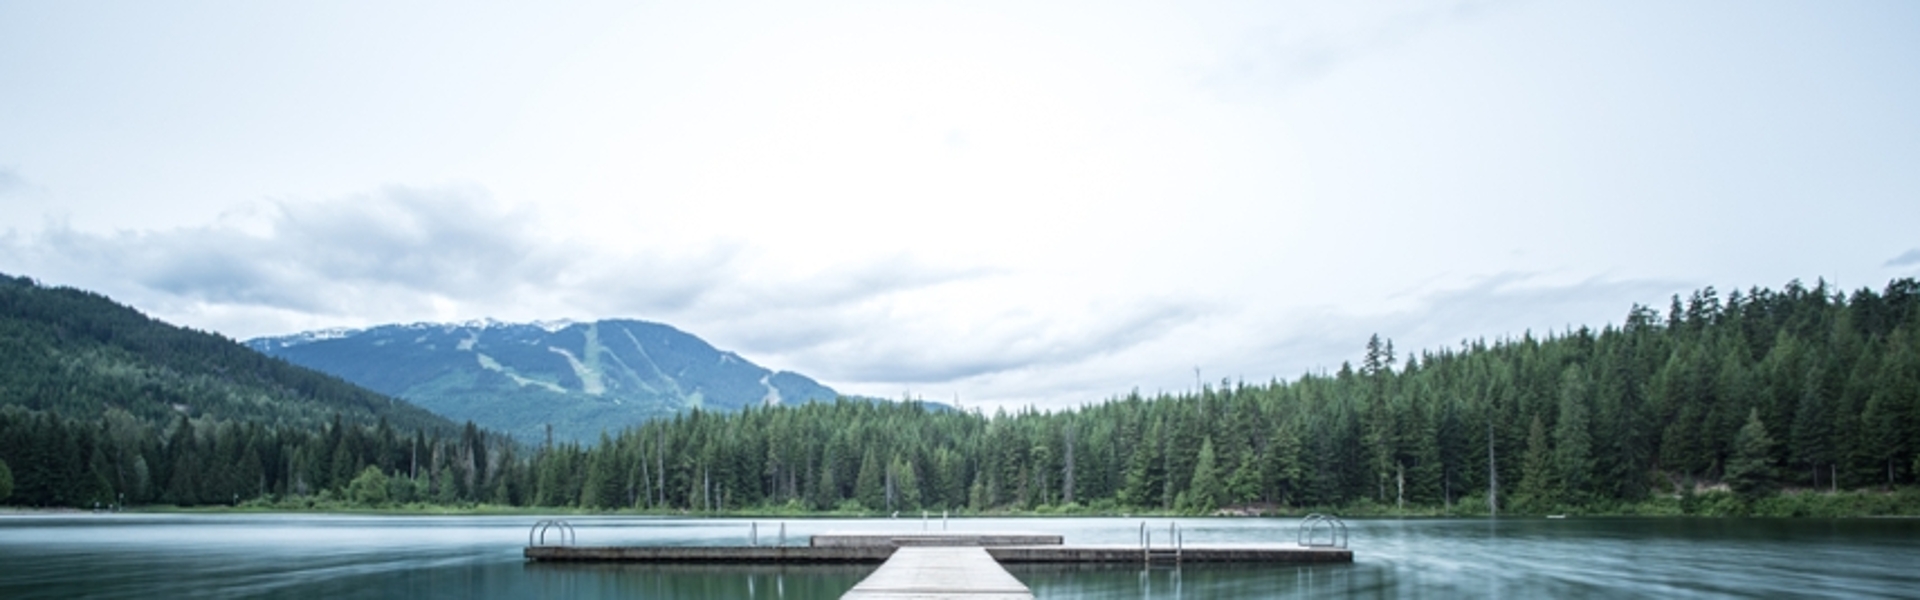 image of a lake mountain view